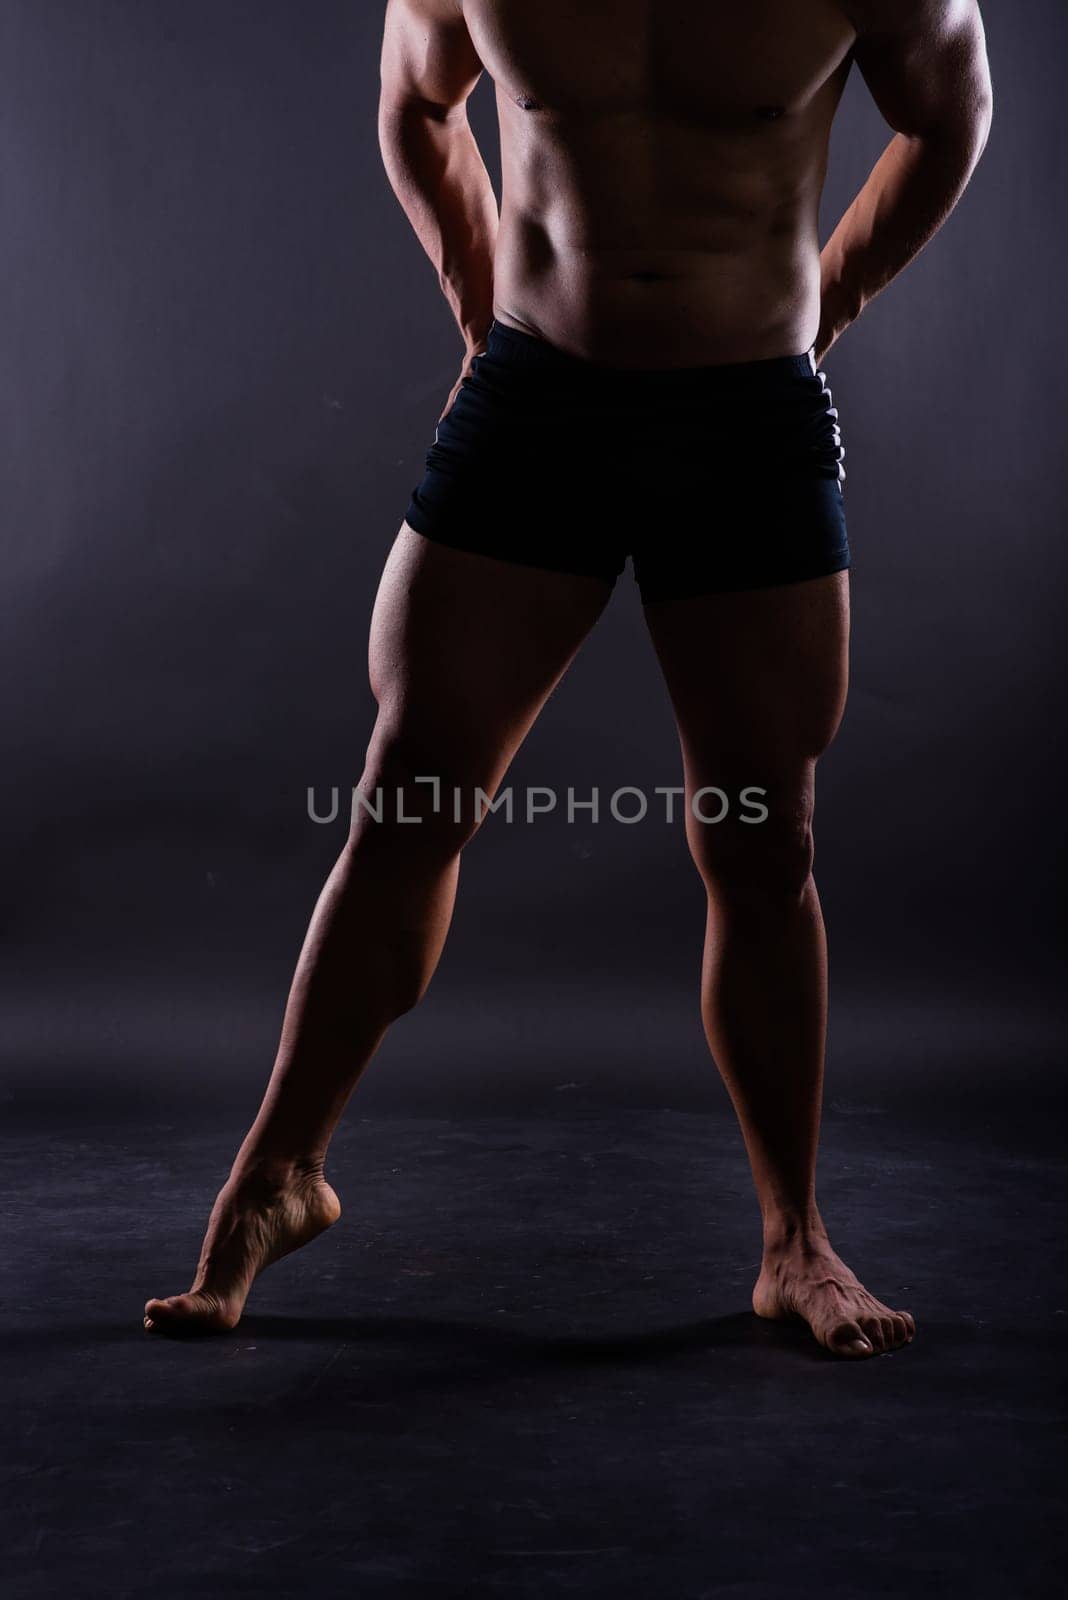 Muscular male legs, man in a studio, dark background